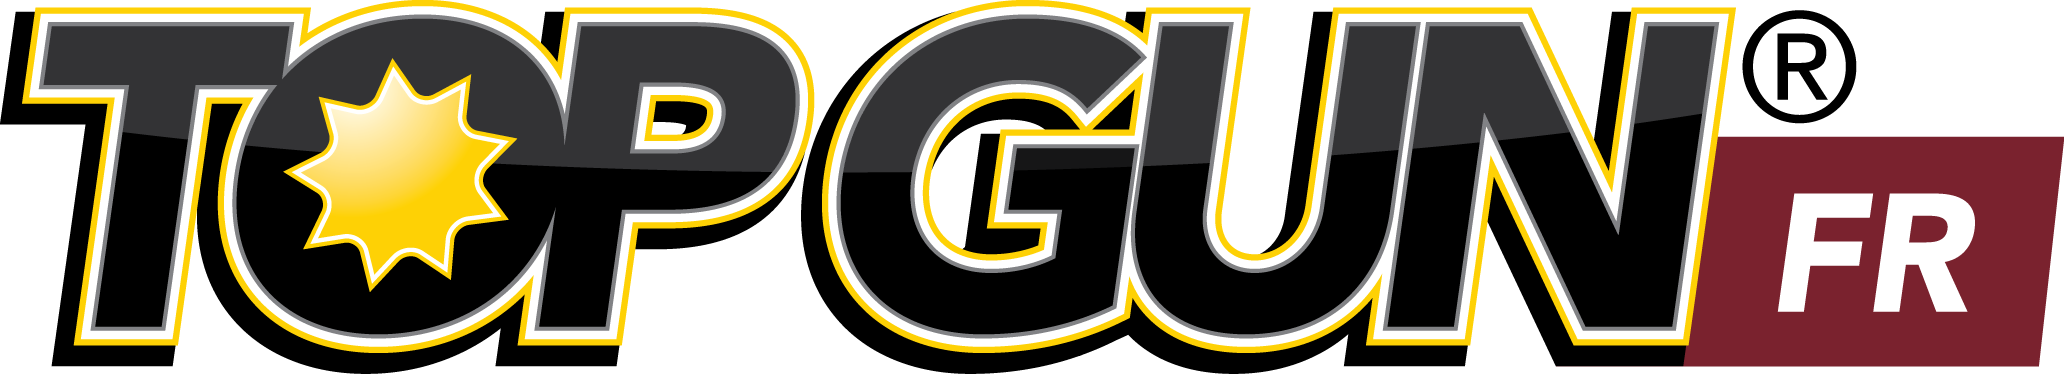 Top Gun FR logo